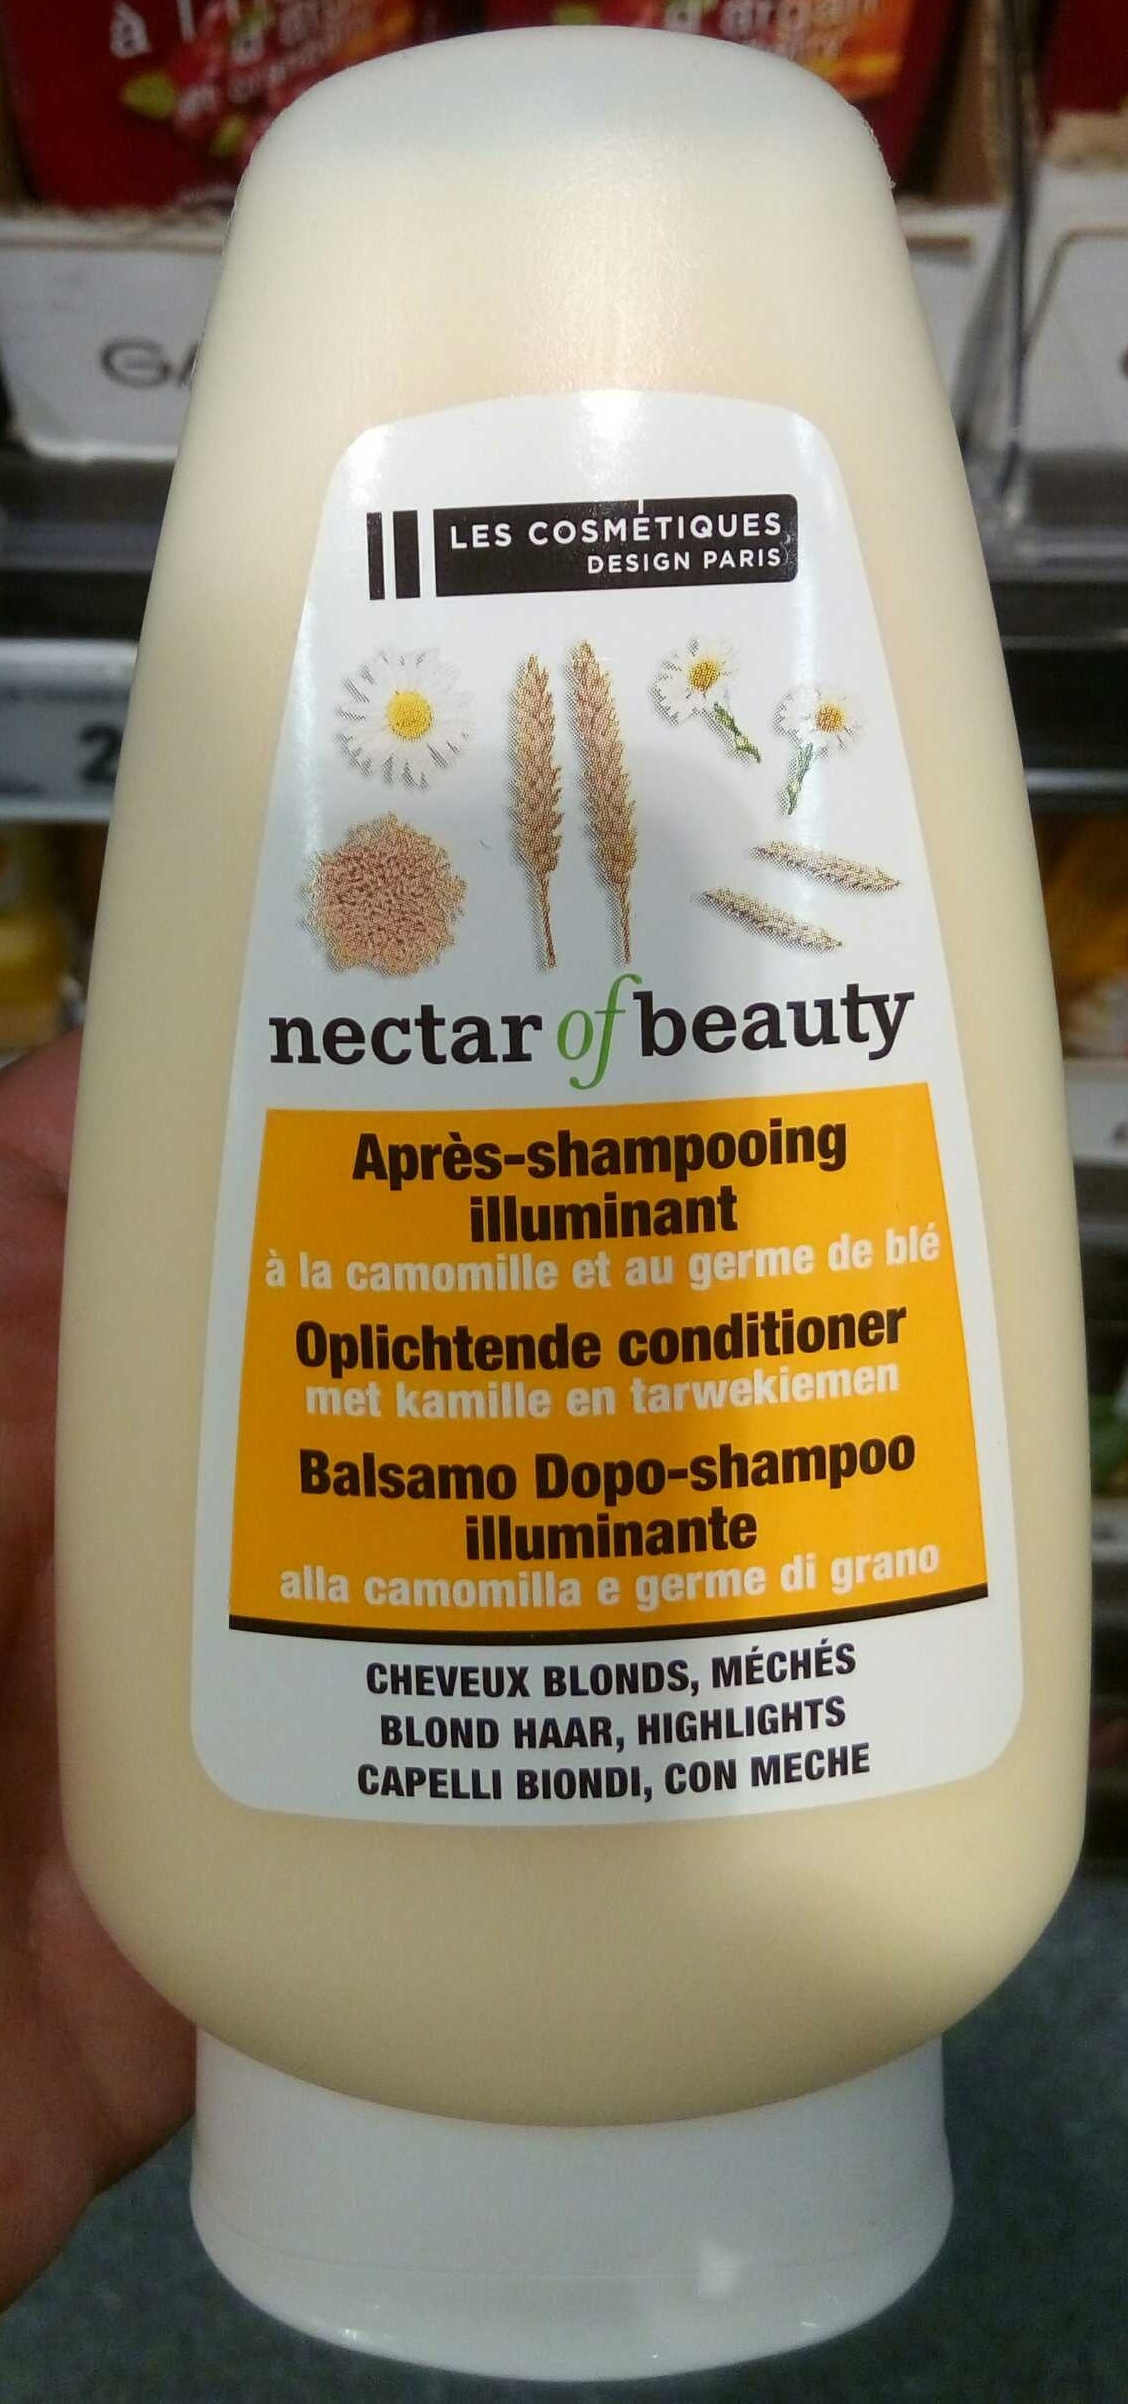 Après-shampooing illuminant - Produit - fr